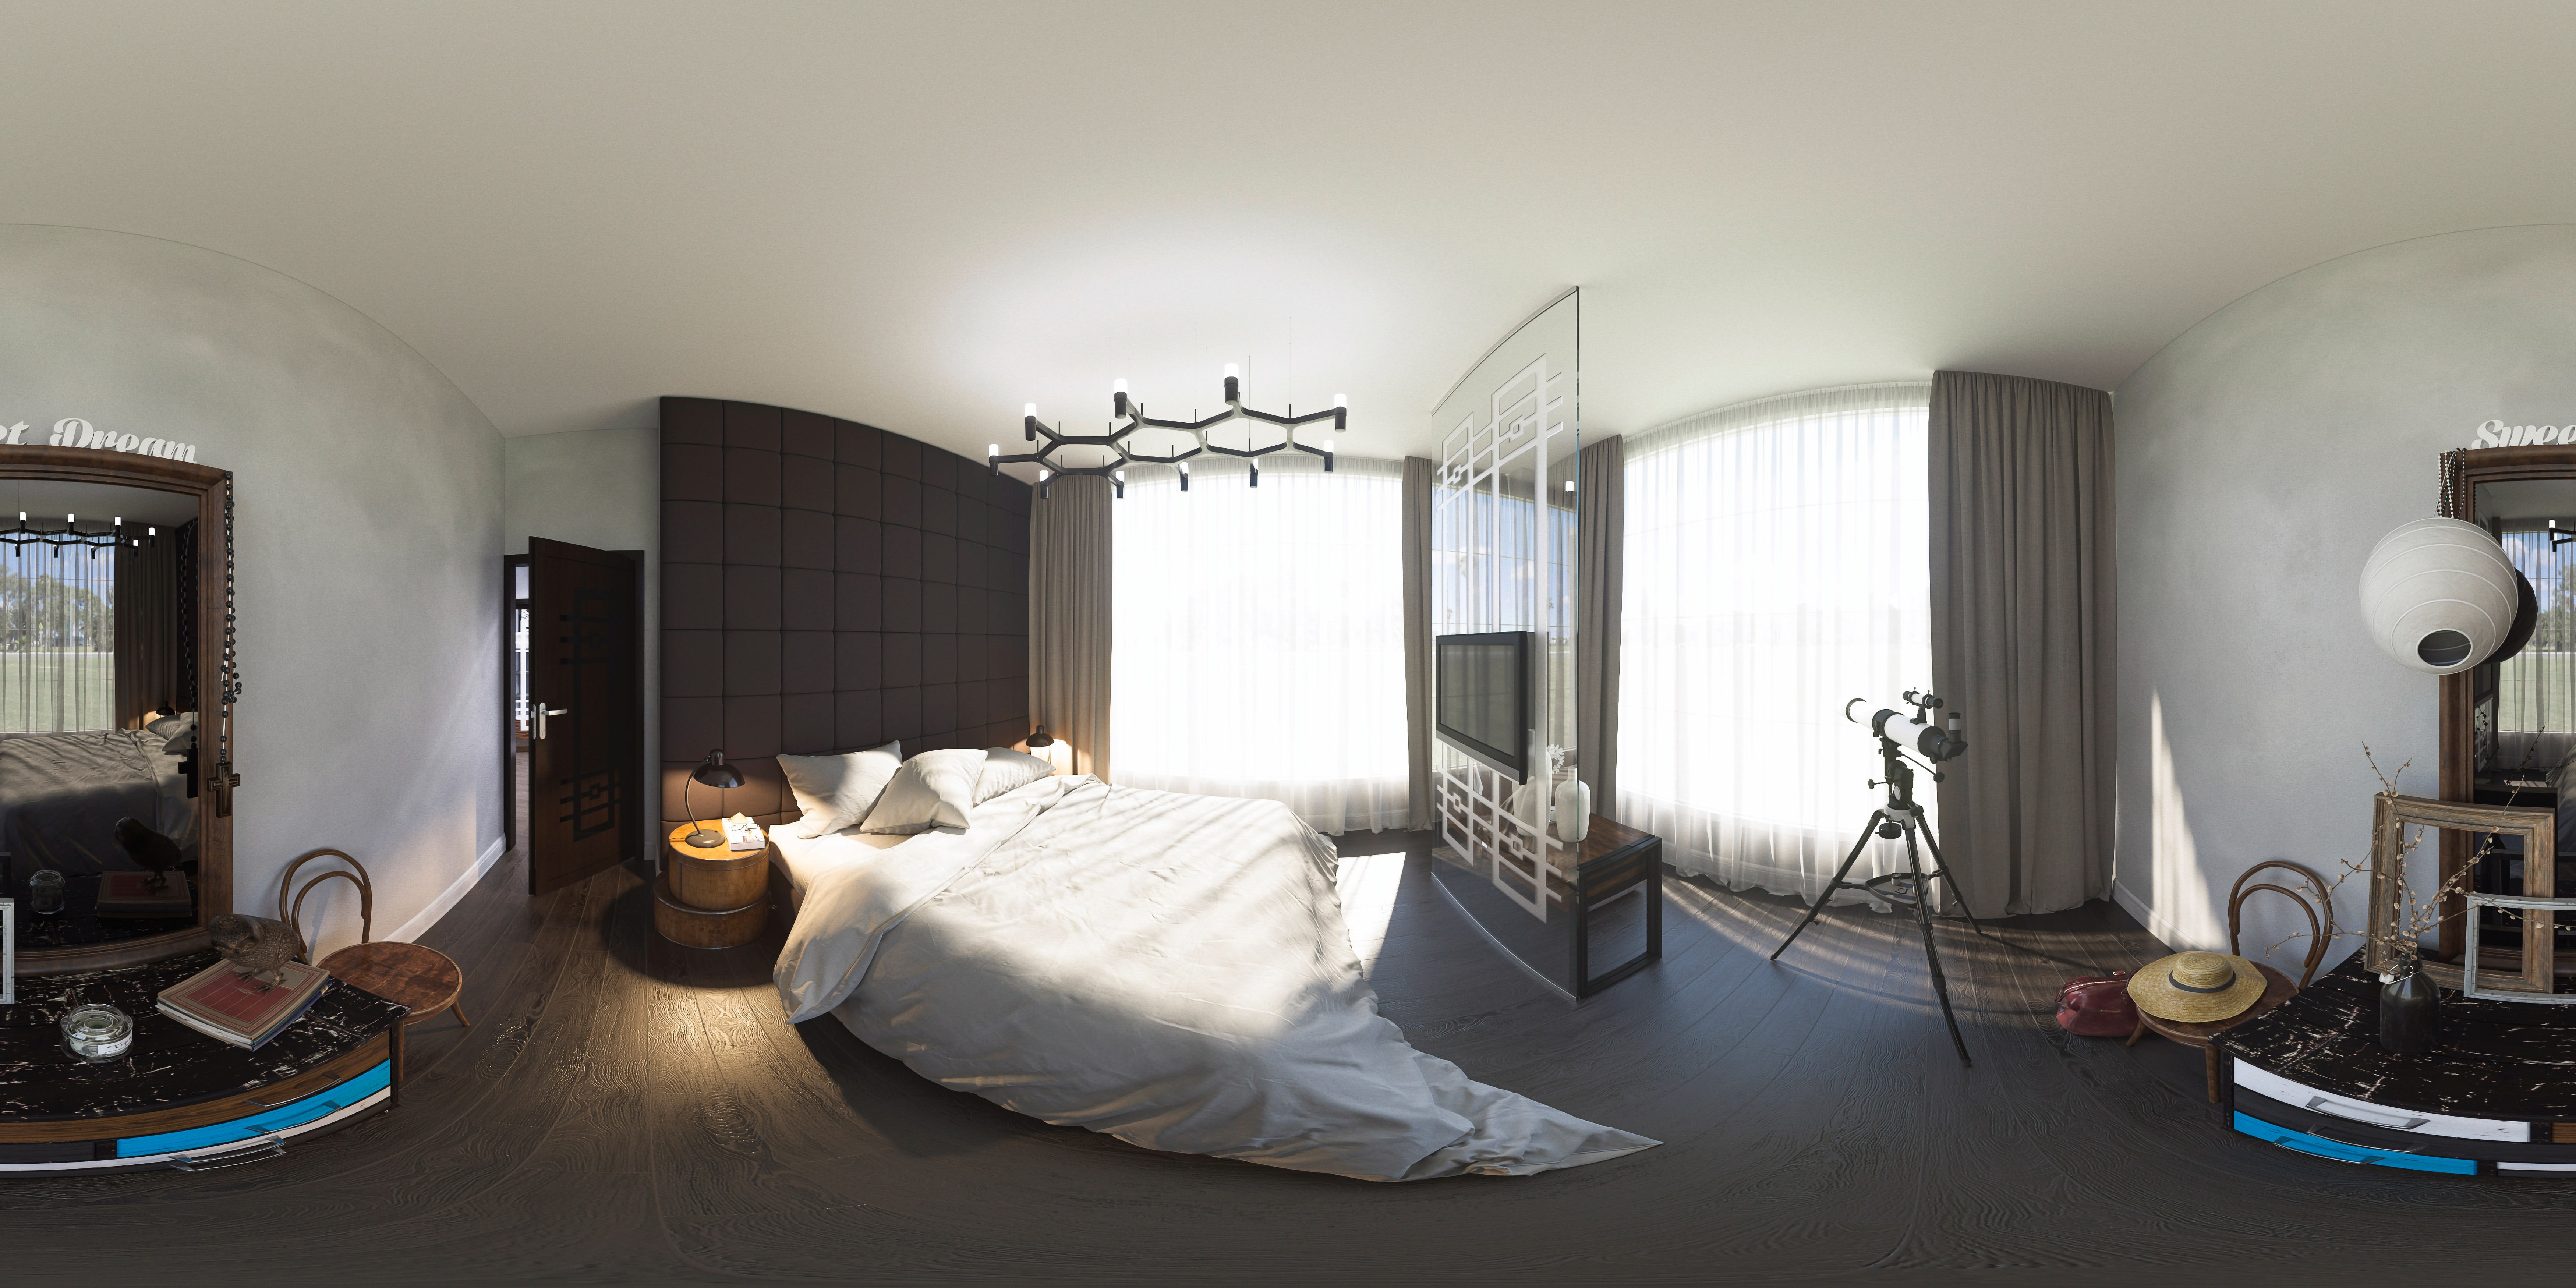 Simplicity Redefined: Small Bedroom Interior Magic by Bedroom Designer